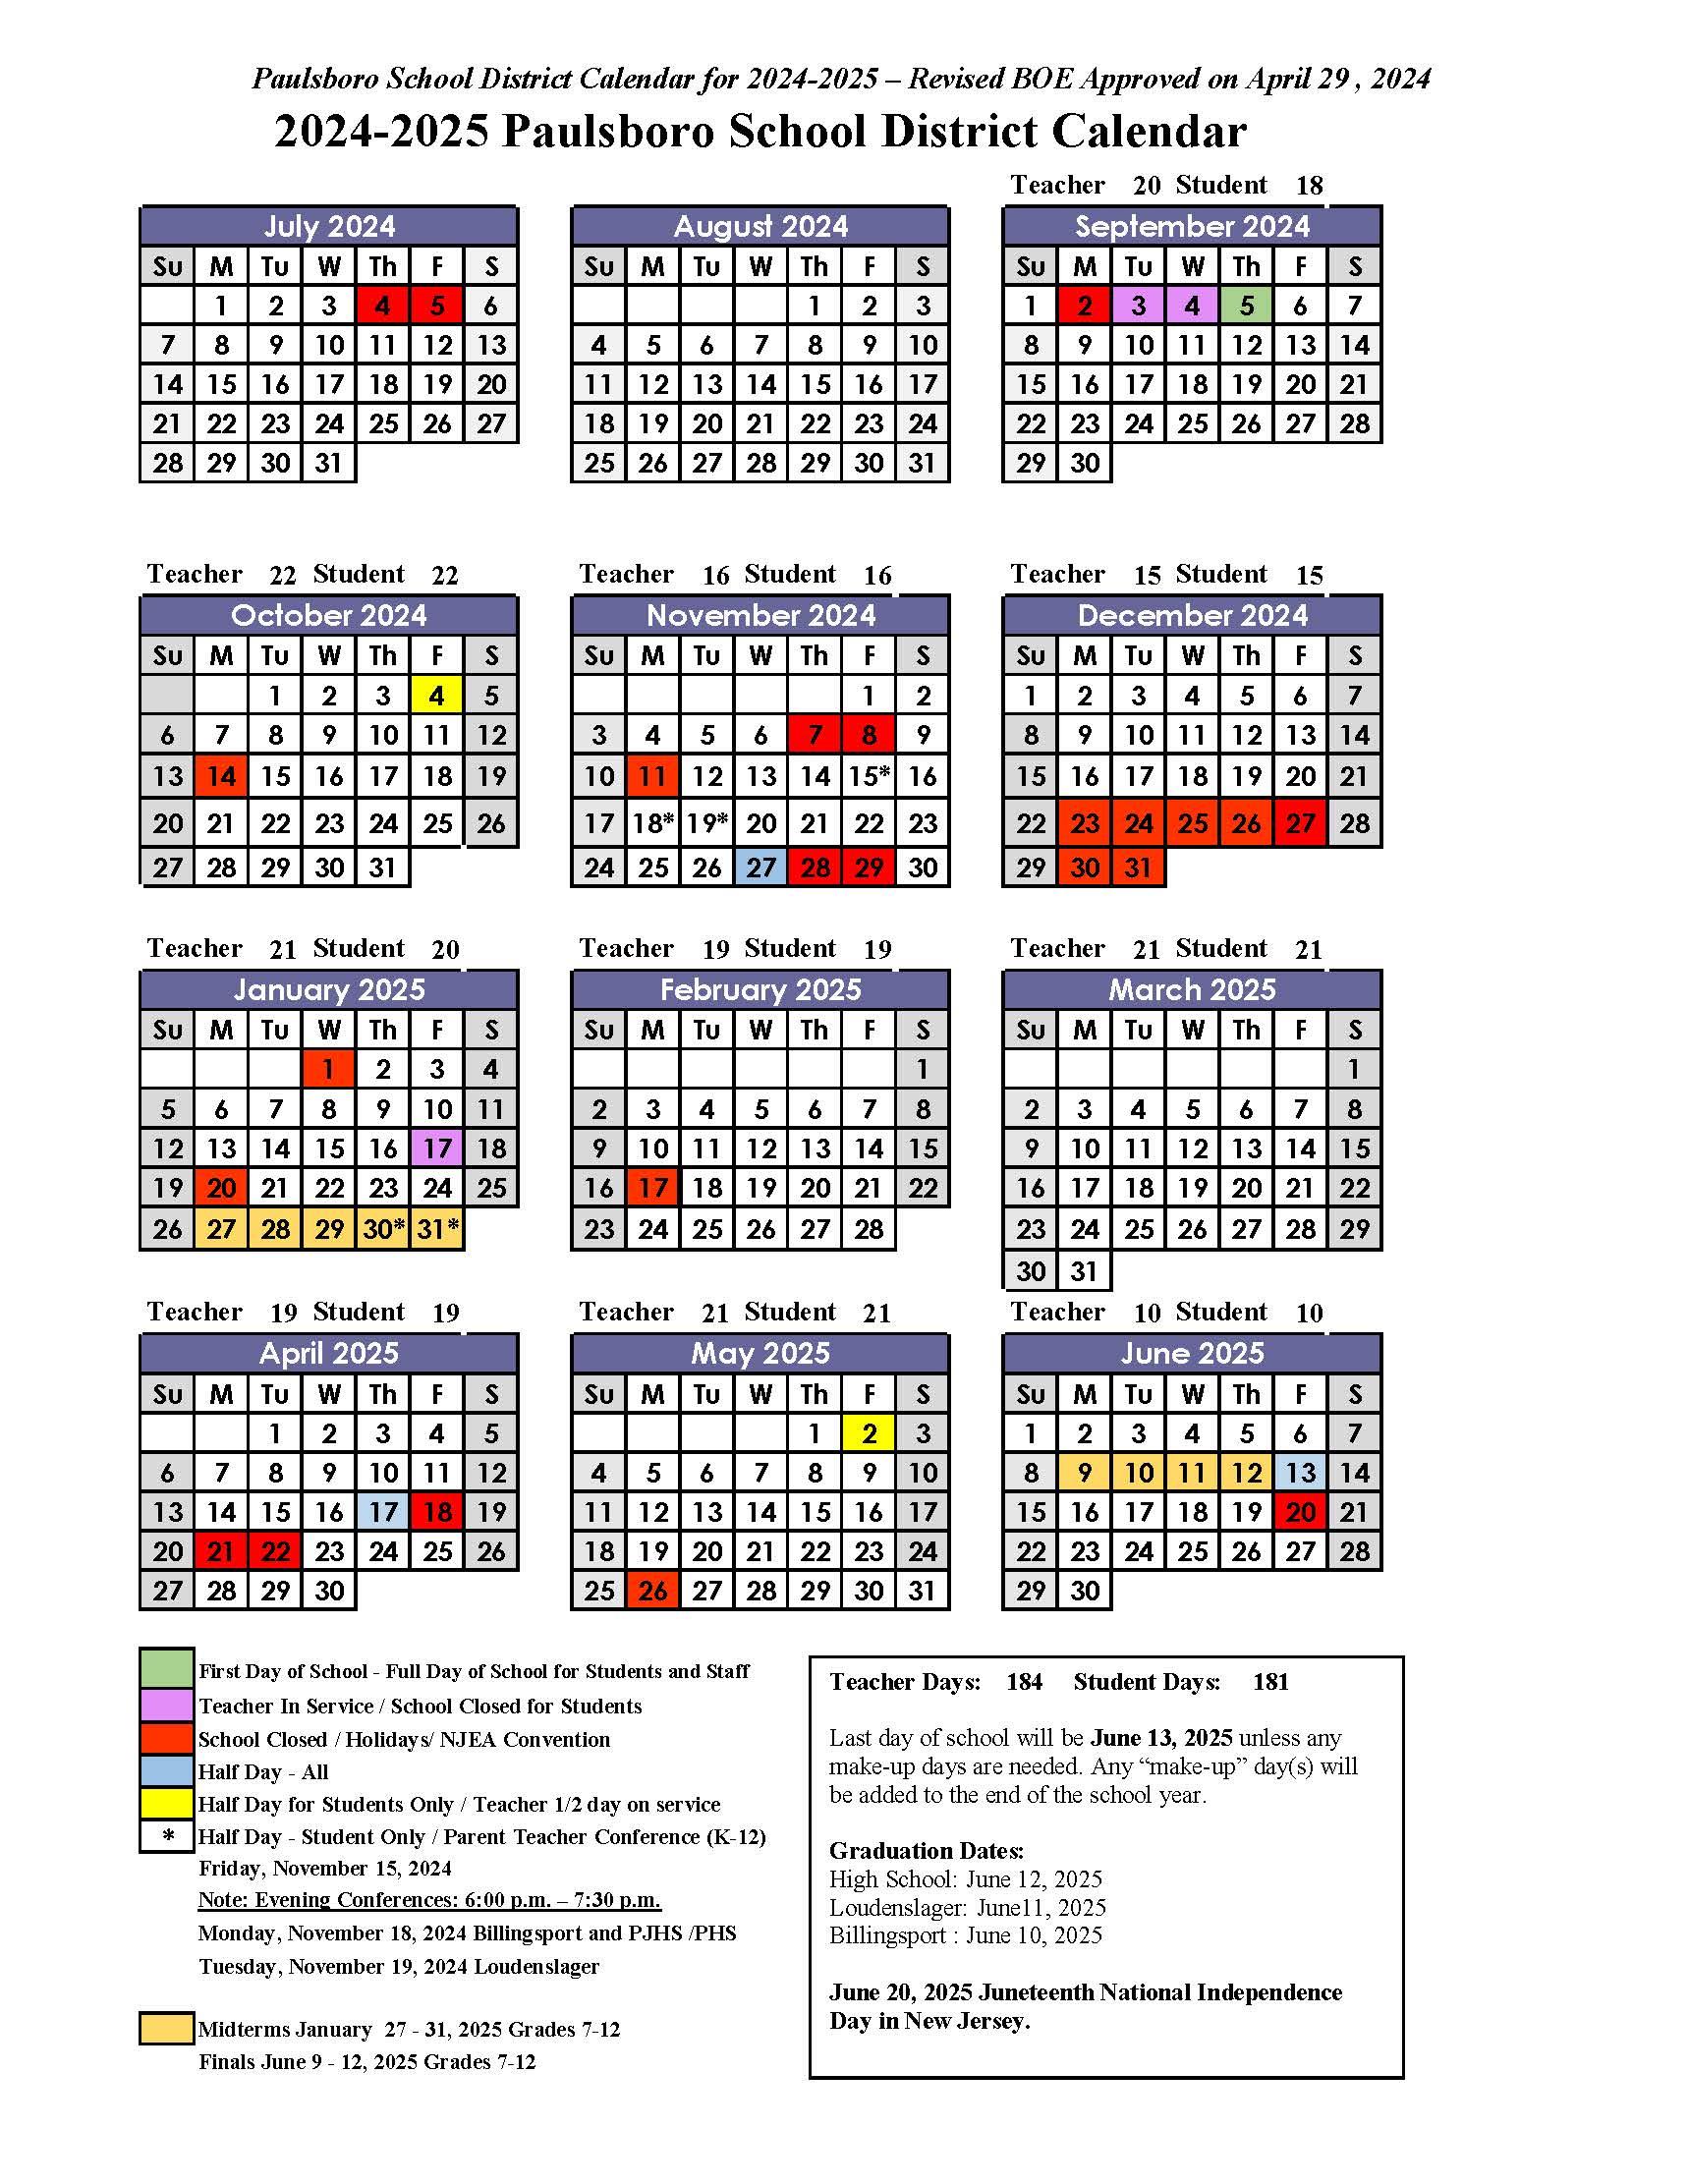 2024-2025 District Calendar